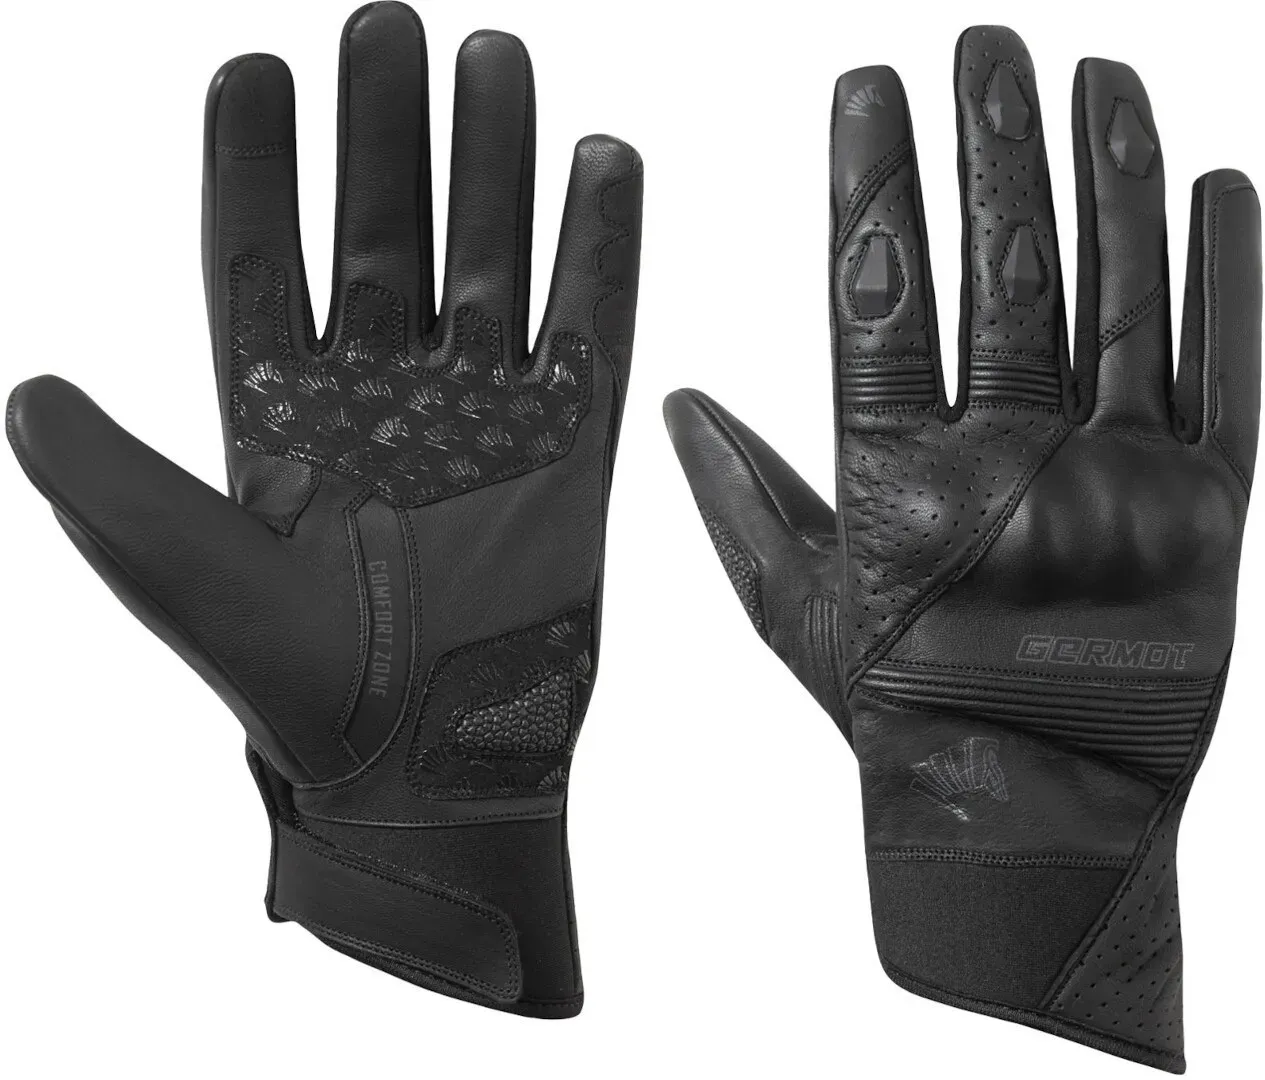 Germot Thompson Motorfiets handschoenen, zwart, M L